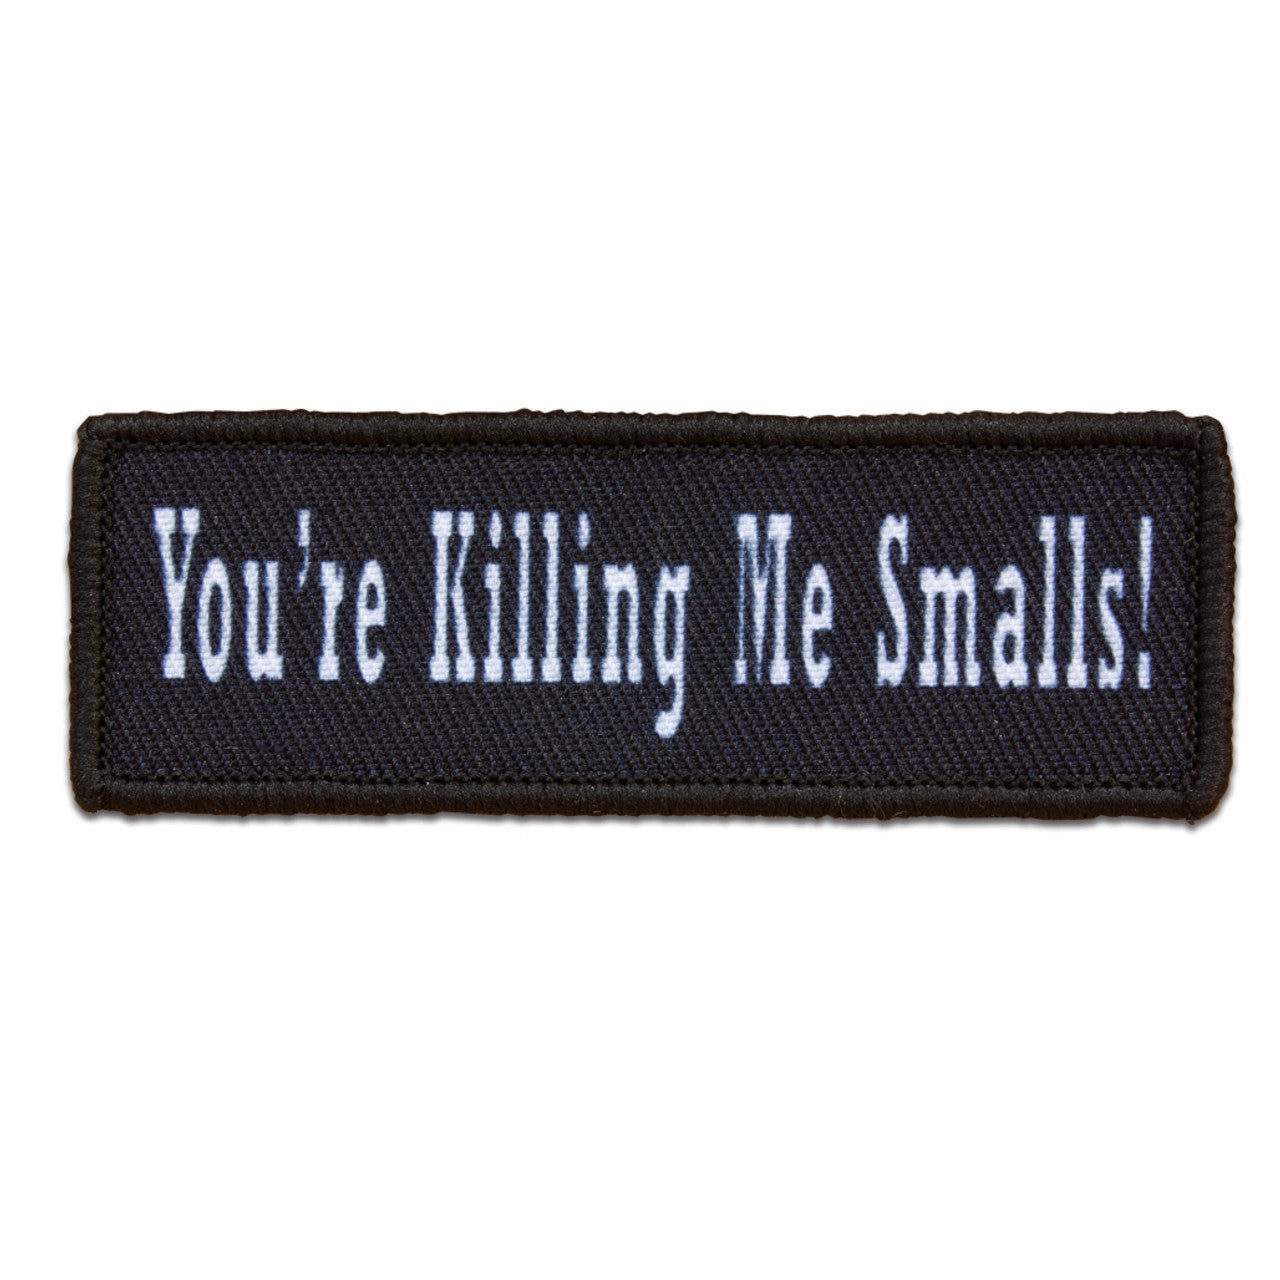 "YOU'RE KILLING ME SMALLS" MORALE PATCH